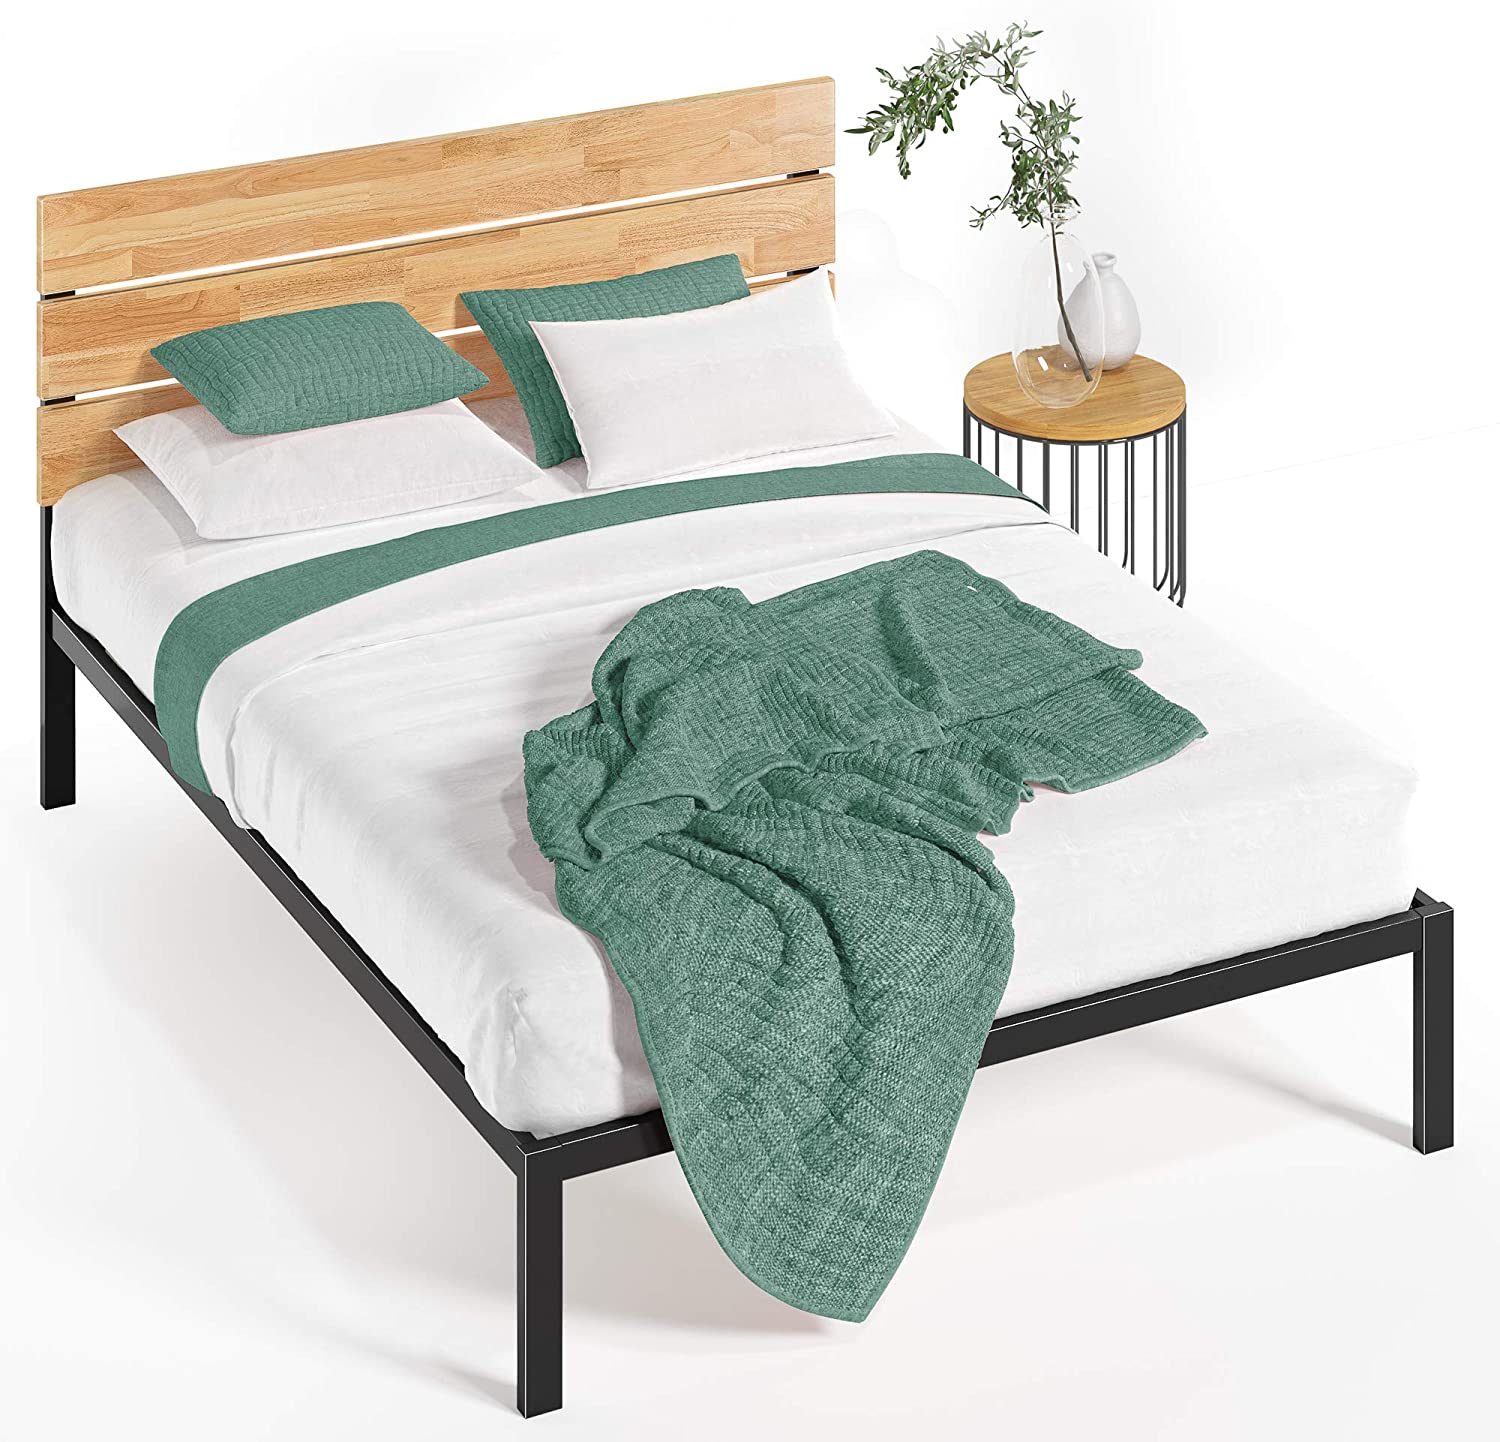 Turin Metal and Wood Platform Bed Frame Nakhlaa